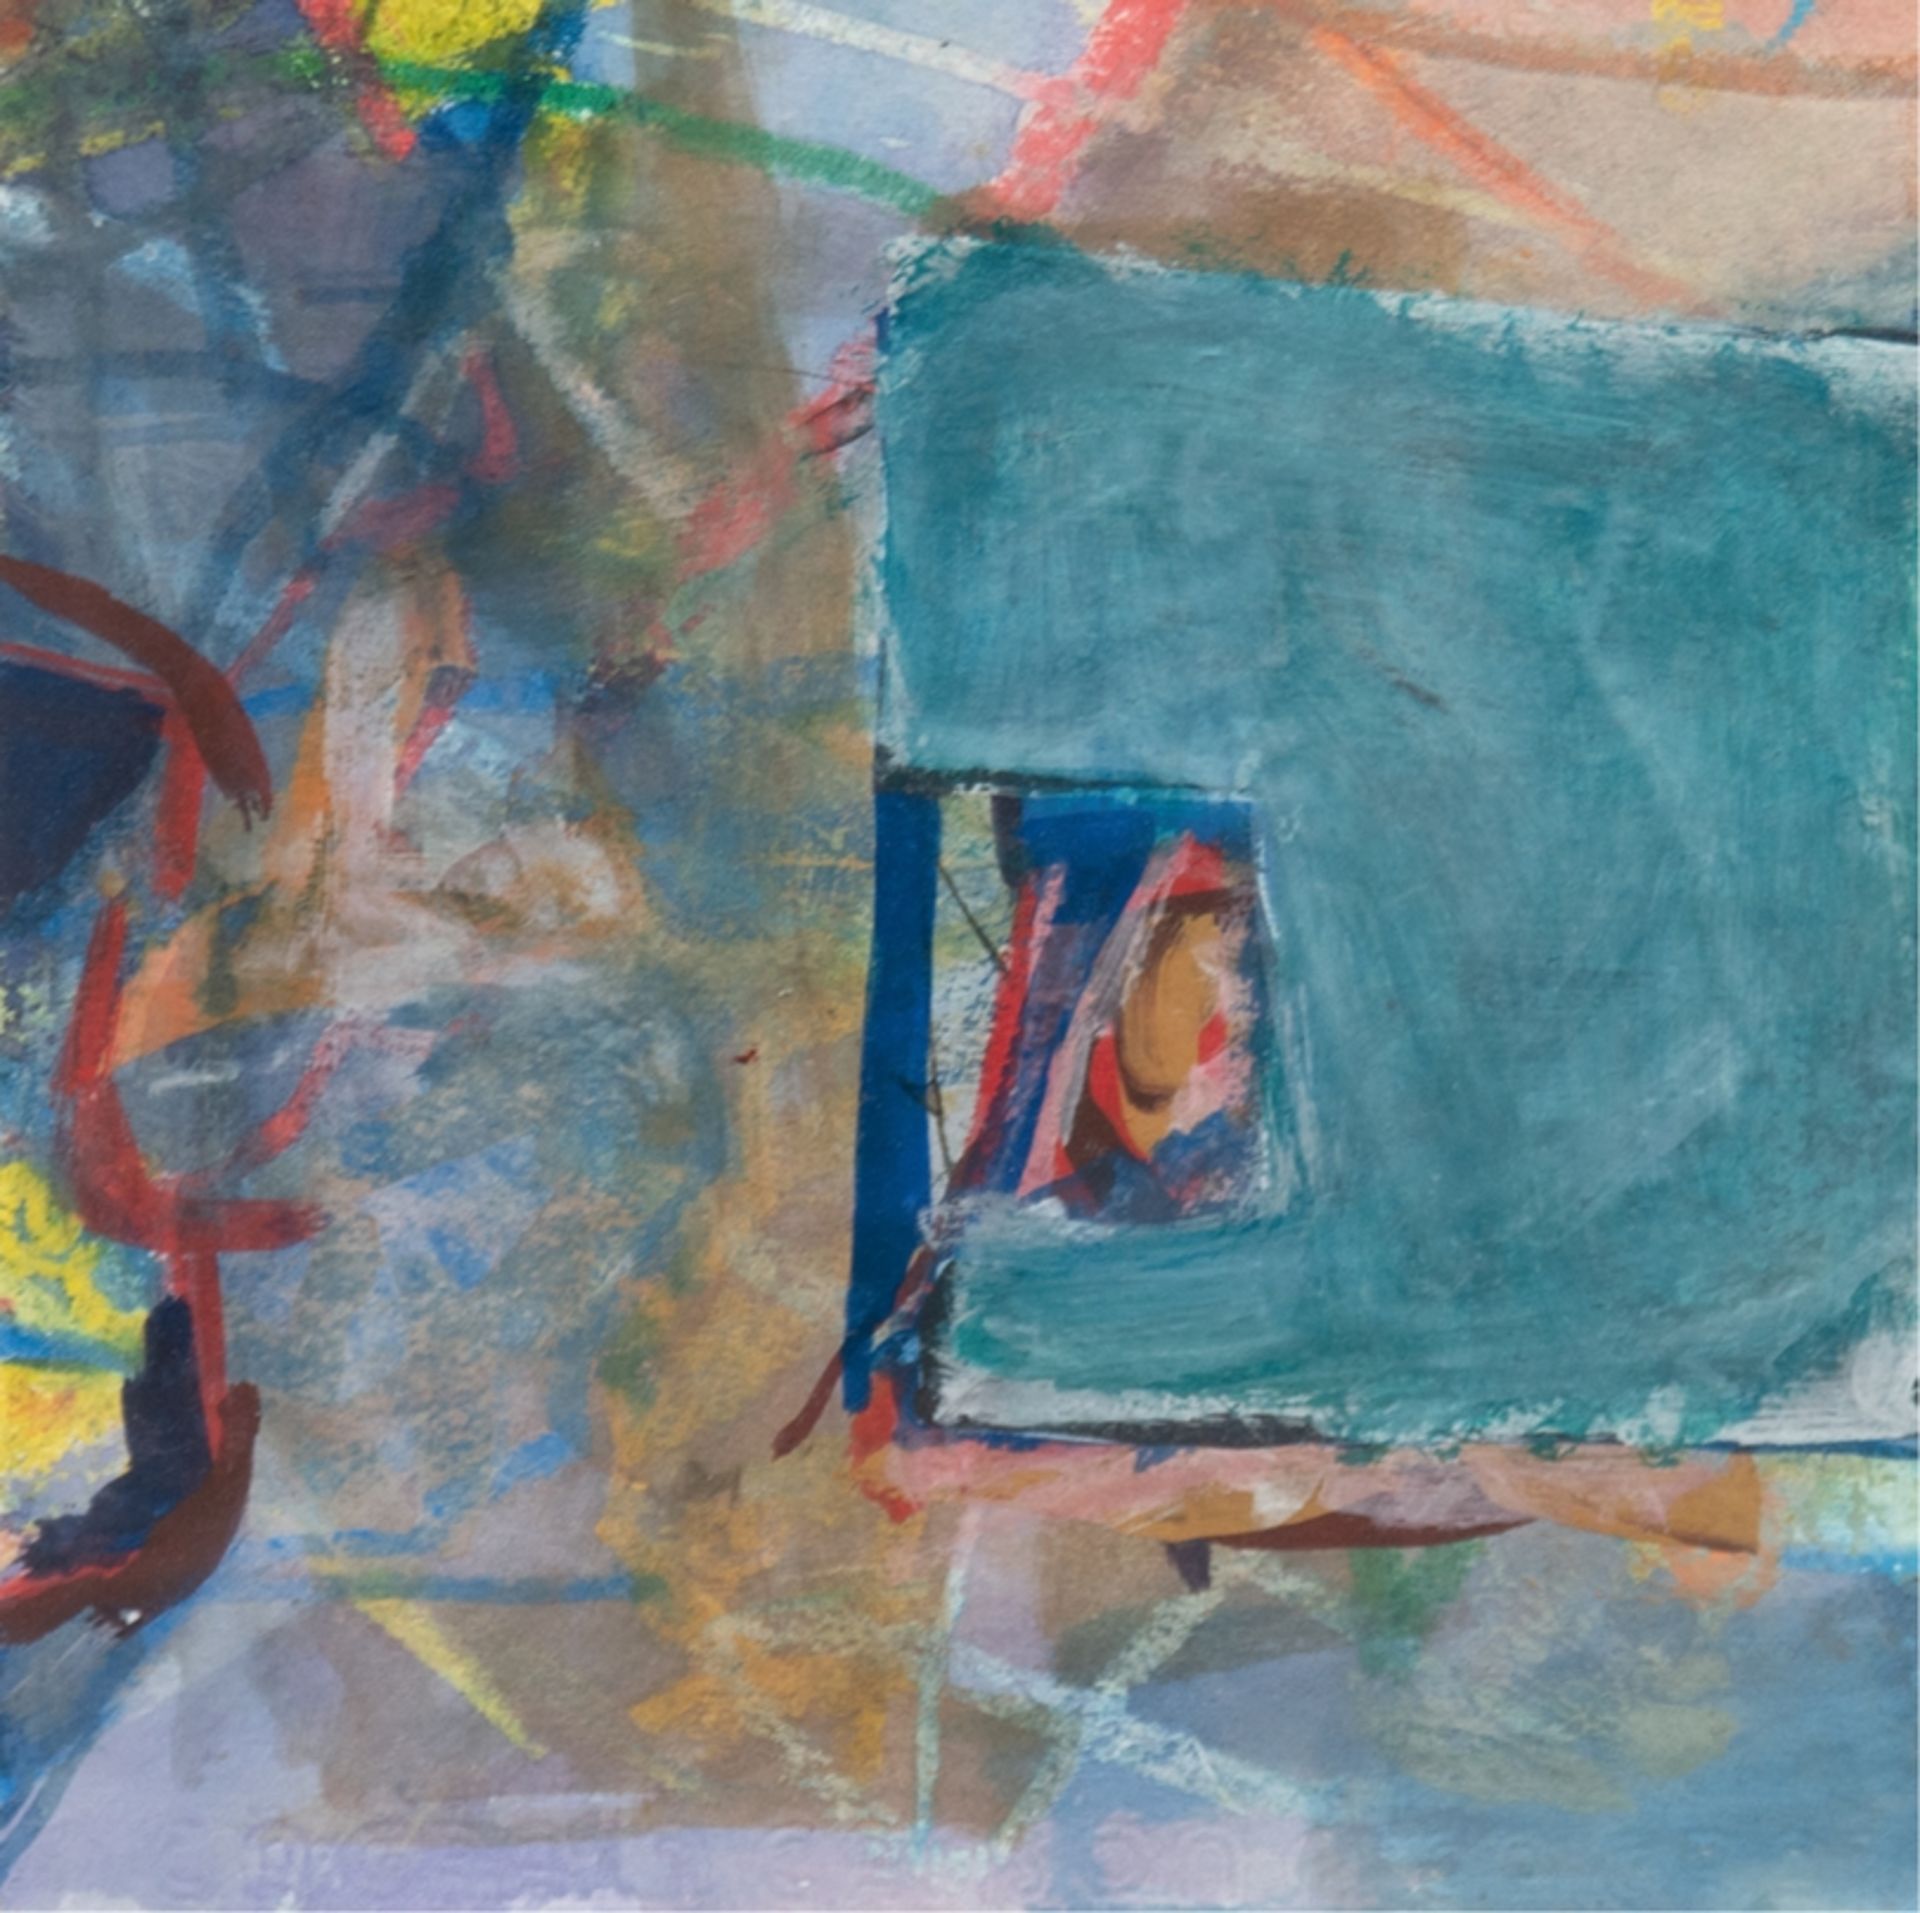 Munteanu-Rimnic, Michaela "Abstrakte Komposition", Aquarell, rücks. bez., 17x17 cm, hinter Glas im 